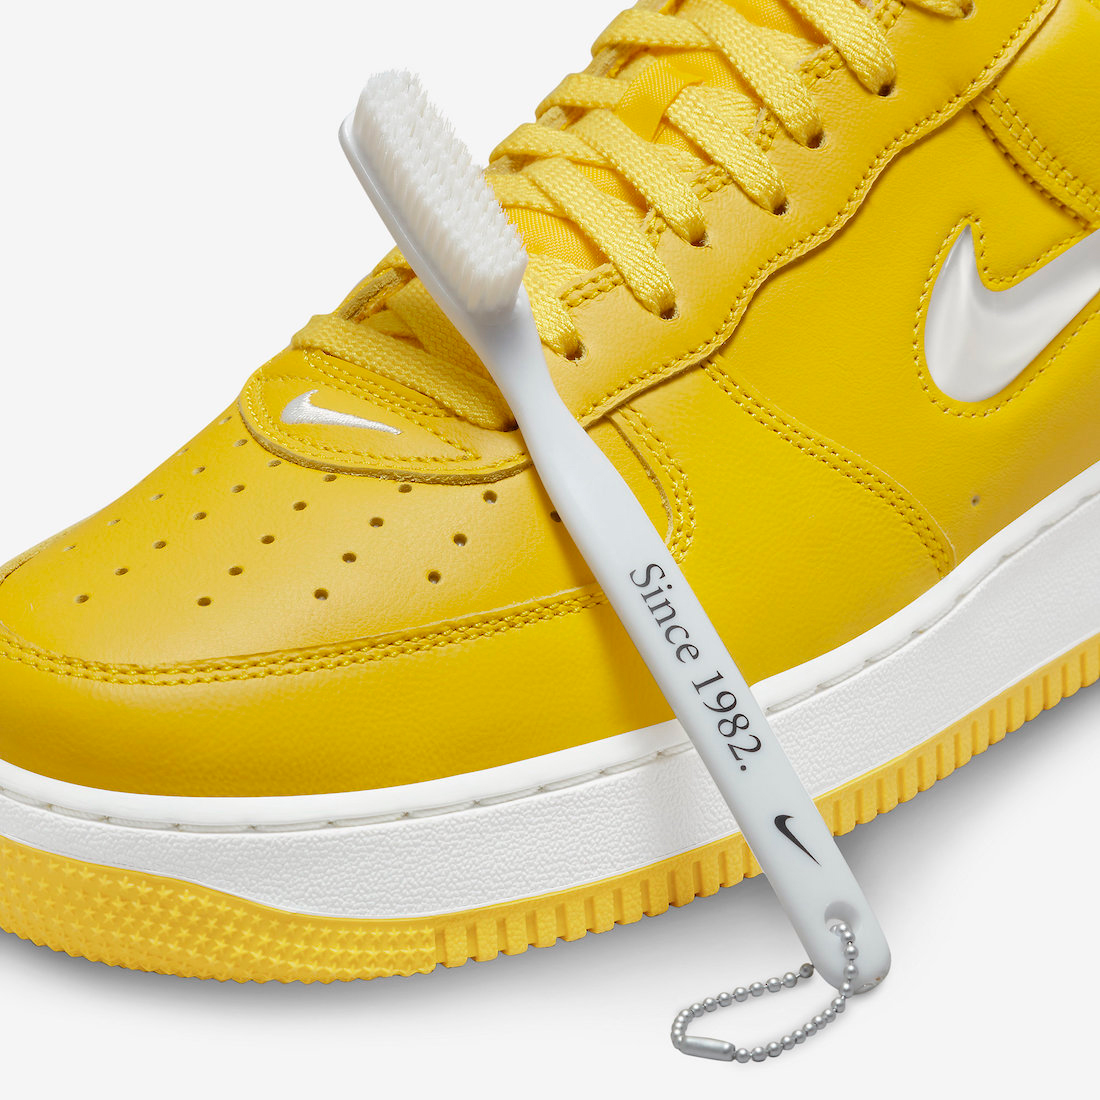 Nike-Air-Force-1-Low-Yellow-Jewel-7